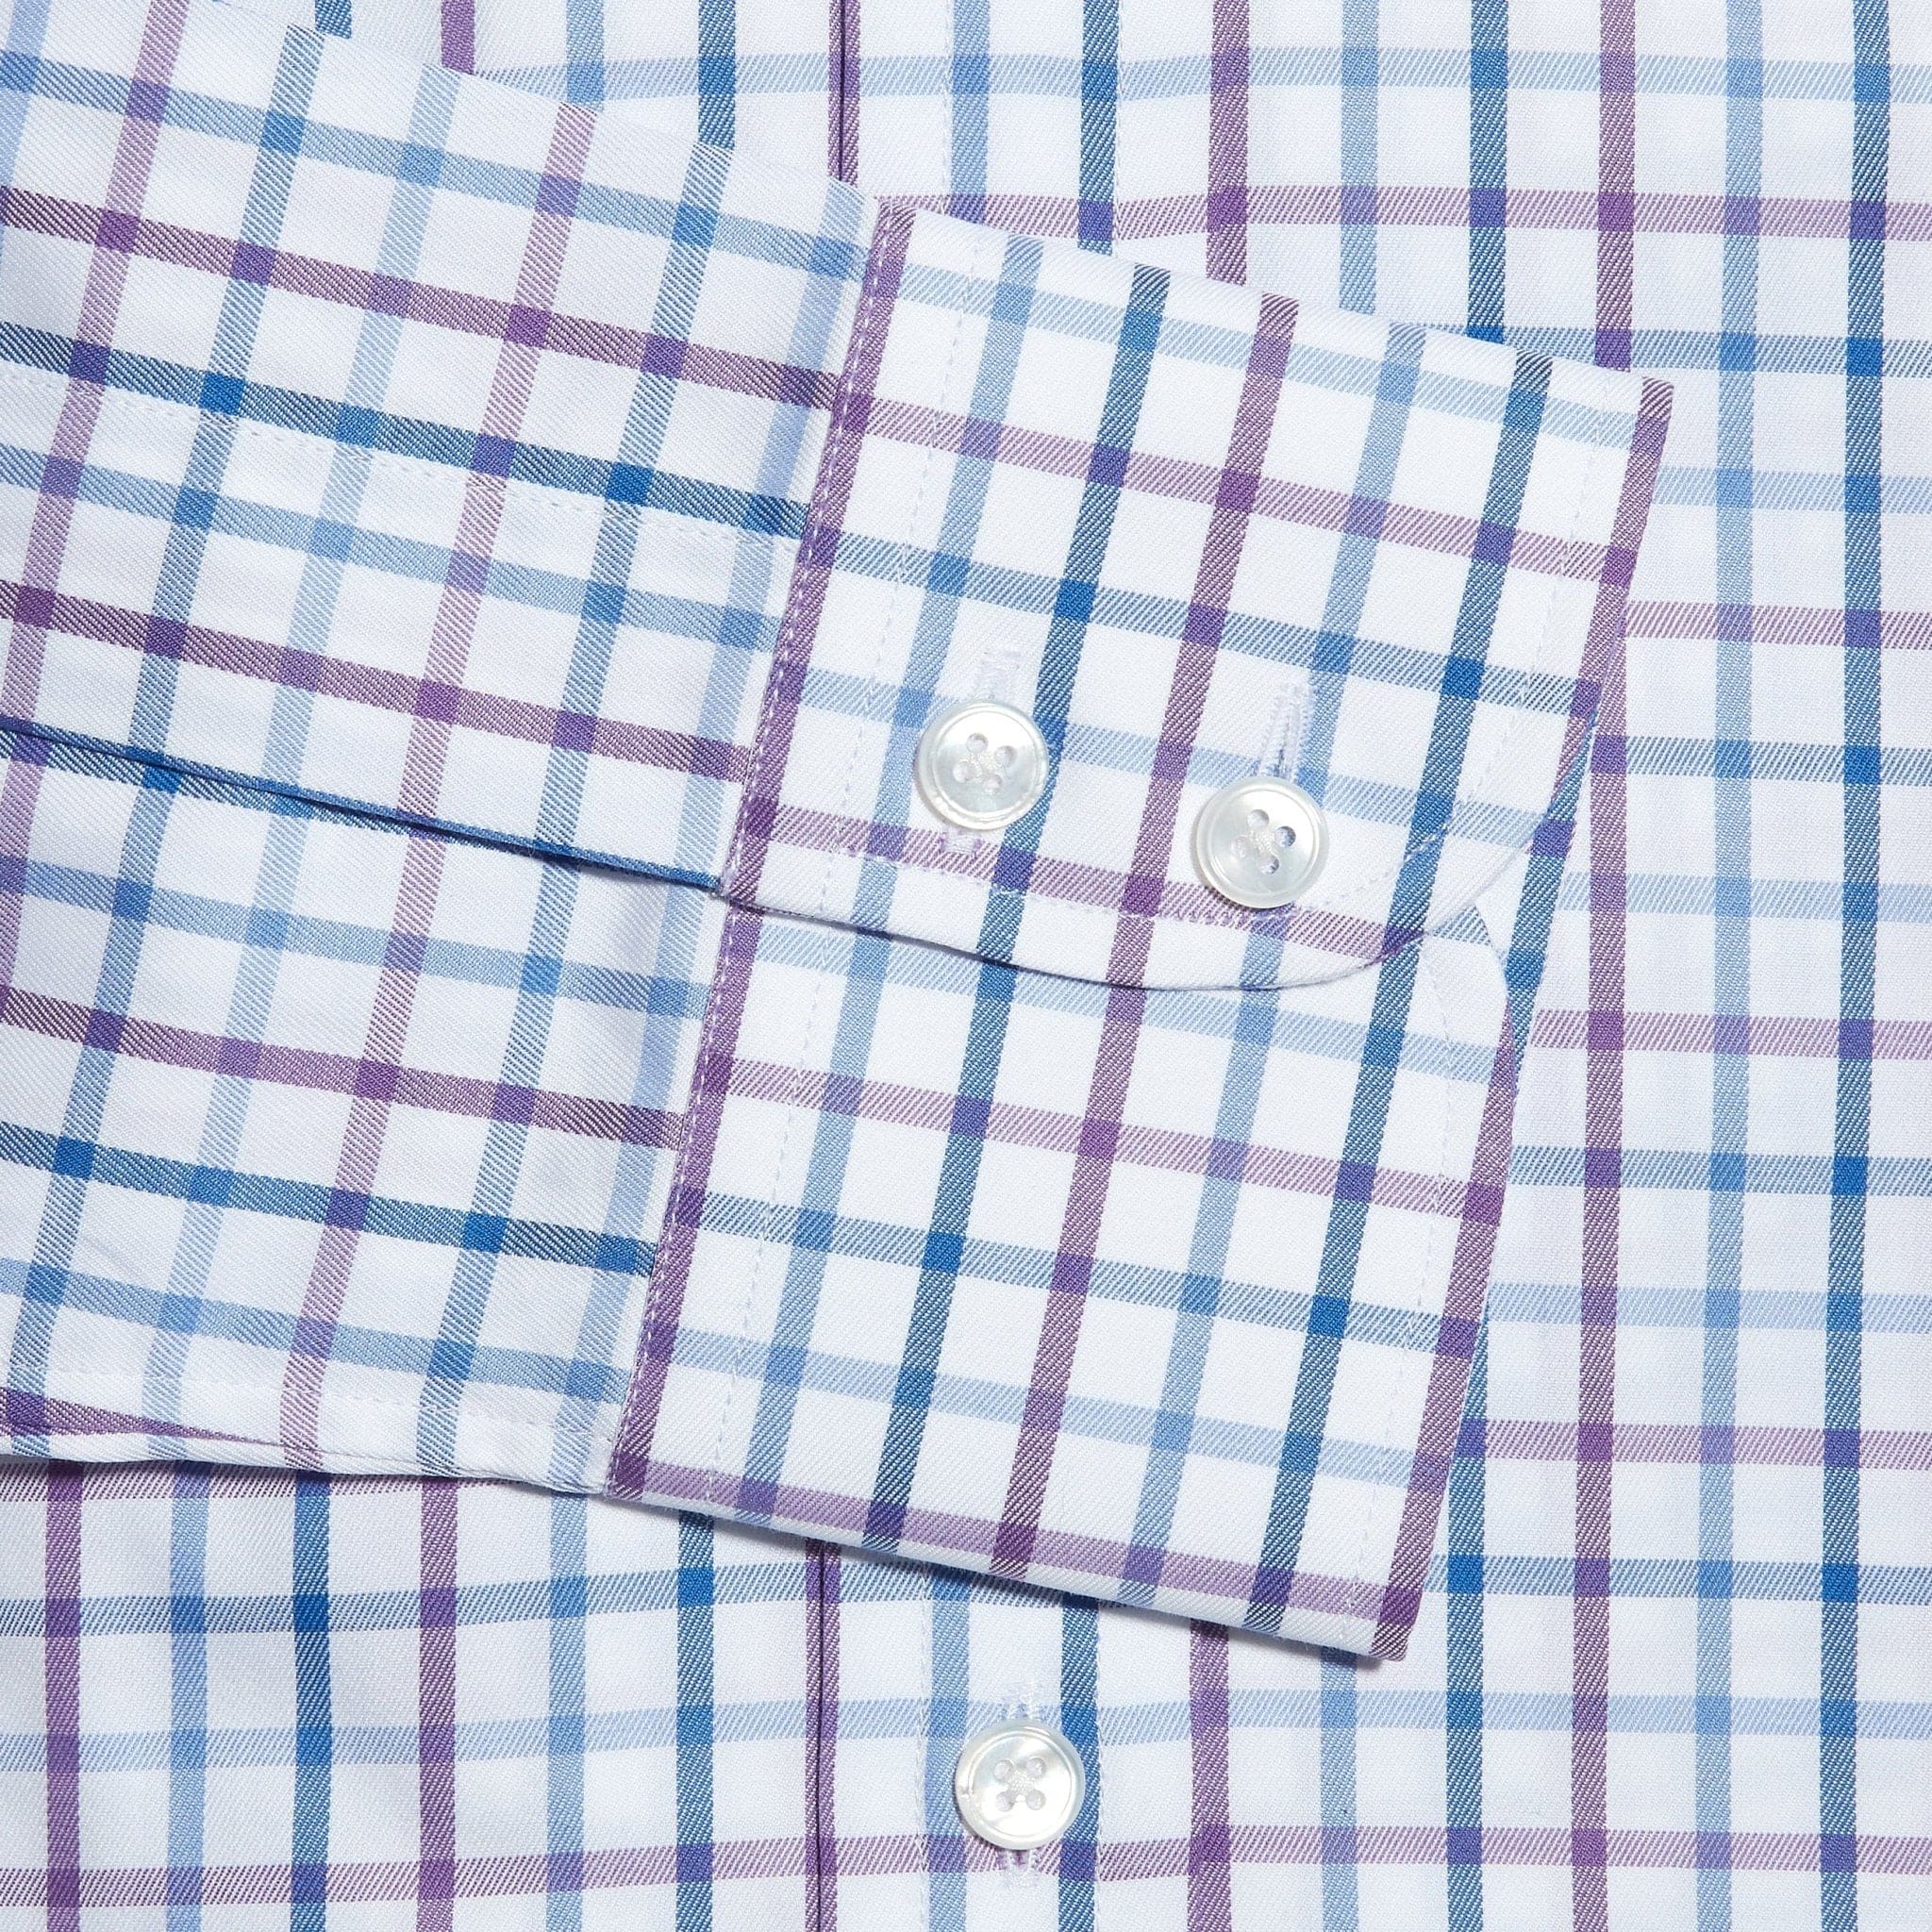 Contemporary Fit, Cut-away Collar, 2 Button Cuff Shirt in a Purple, Blue & White Overcheck Twill Cotton